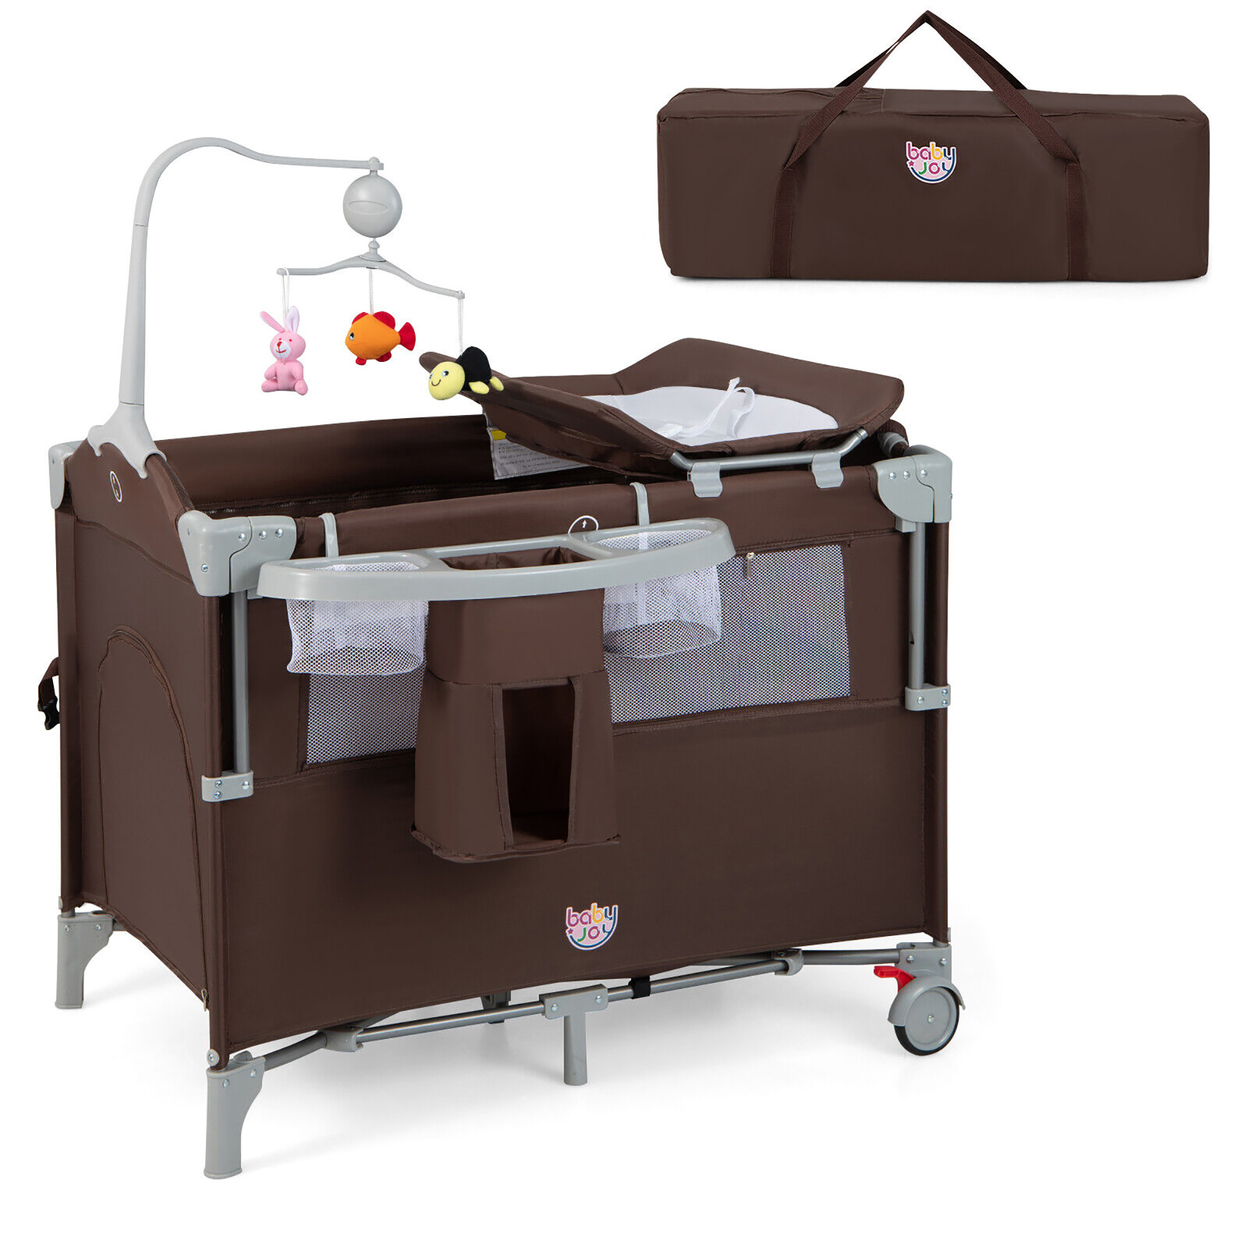 5-in-1 Baby Beside Sleeper Bassinet Portable Crib Playard W/Diaper Changer - Brown